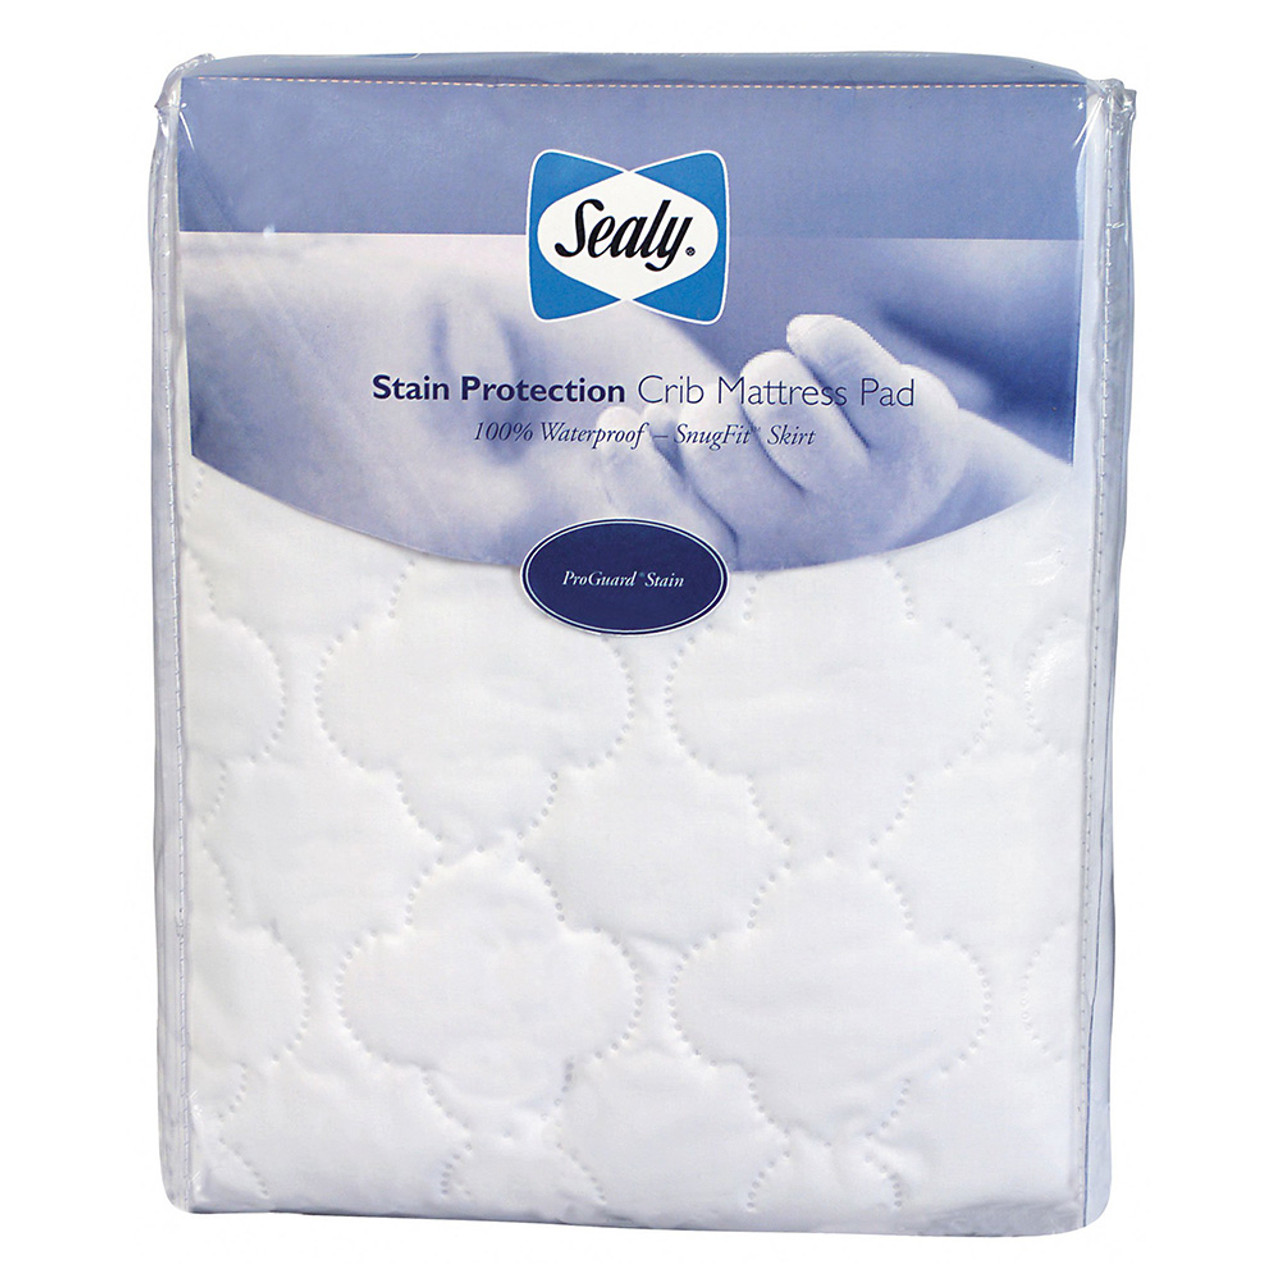 Sealy Securestay Waterproof Crib Mattress Pad, White